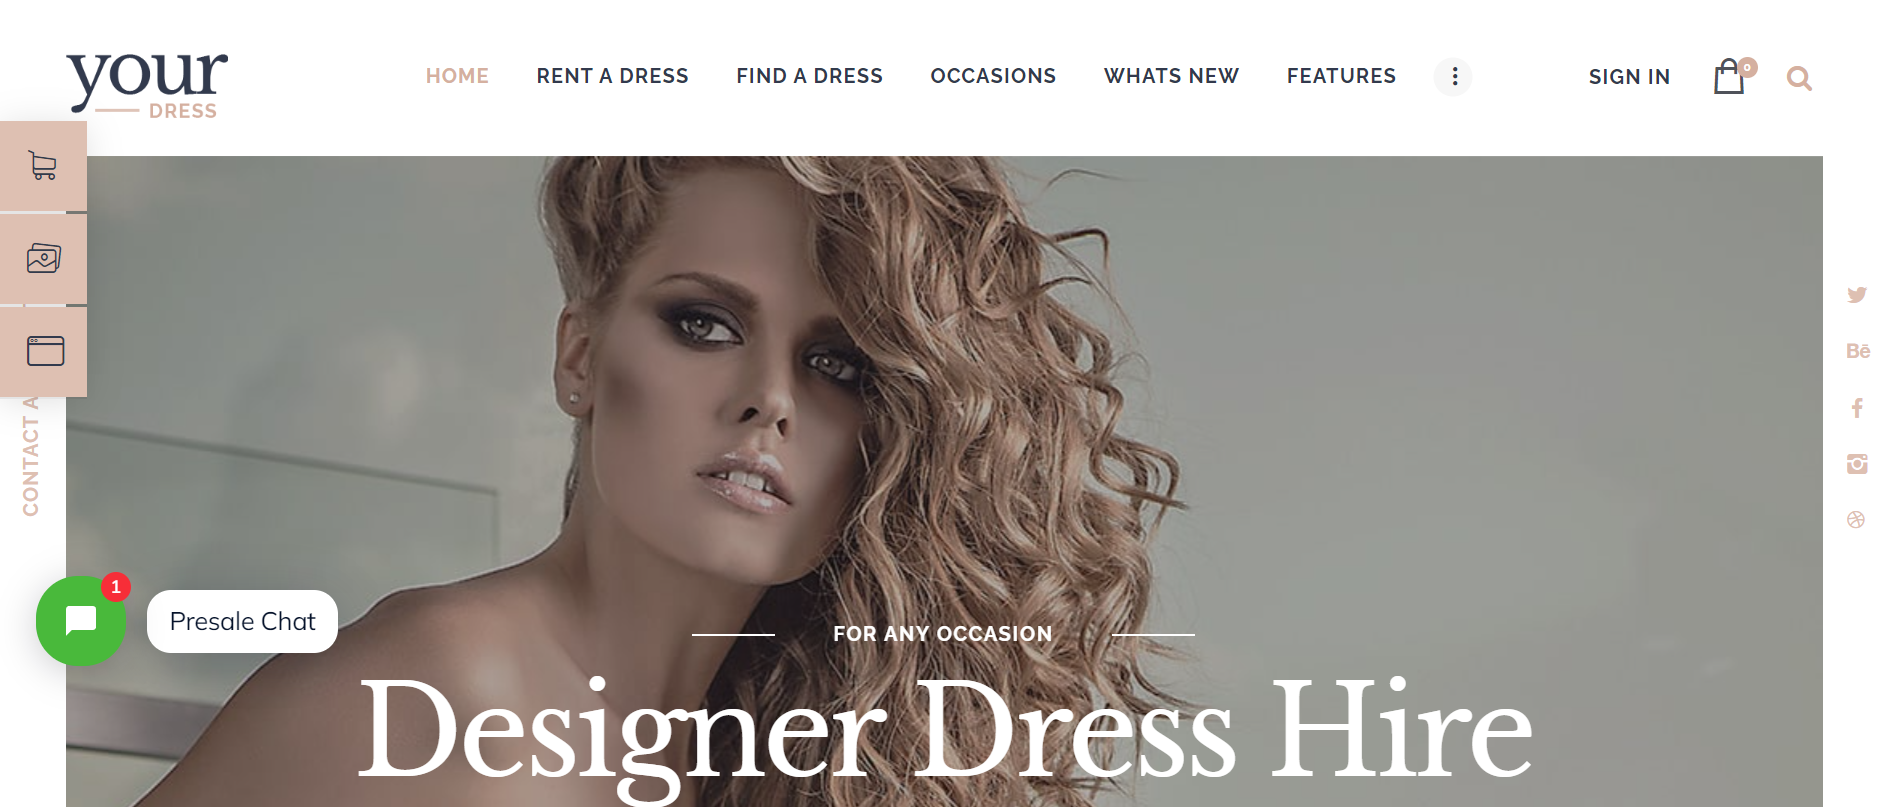 Your Dress - Best Premium Retail Shop WordPress Theme